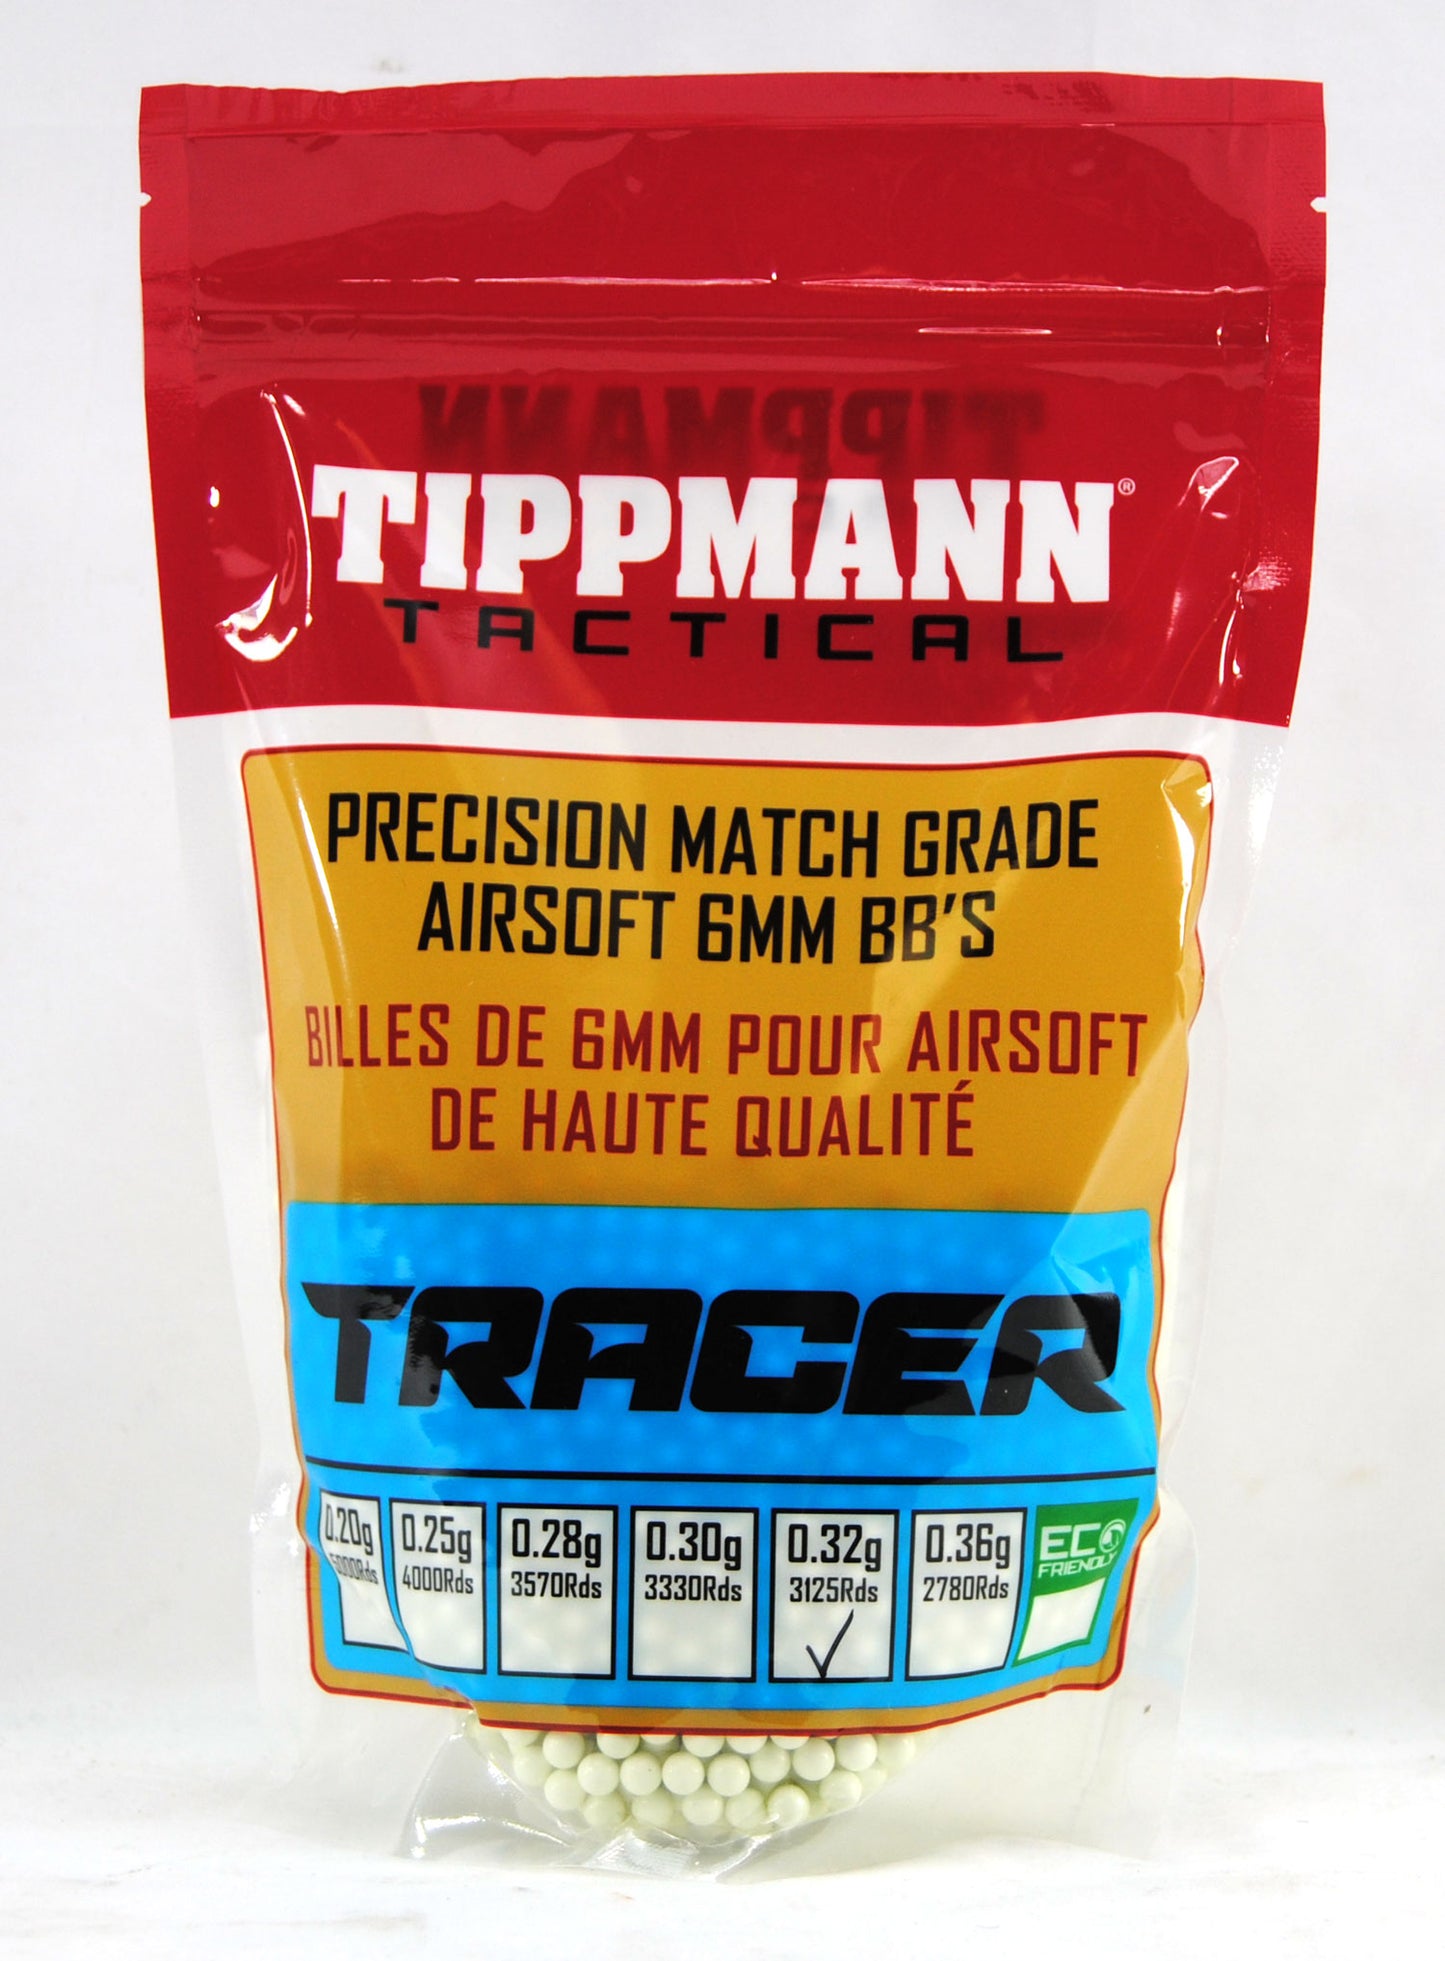 Tippmann Tactical Tracer 6mm BBs 1kg Bag